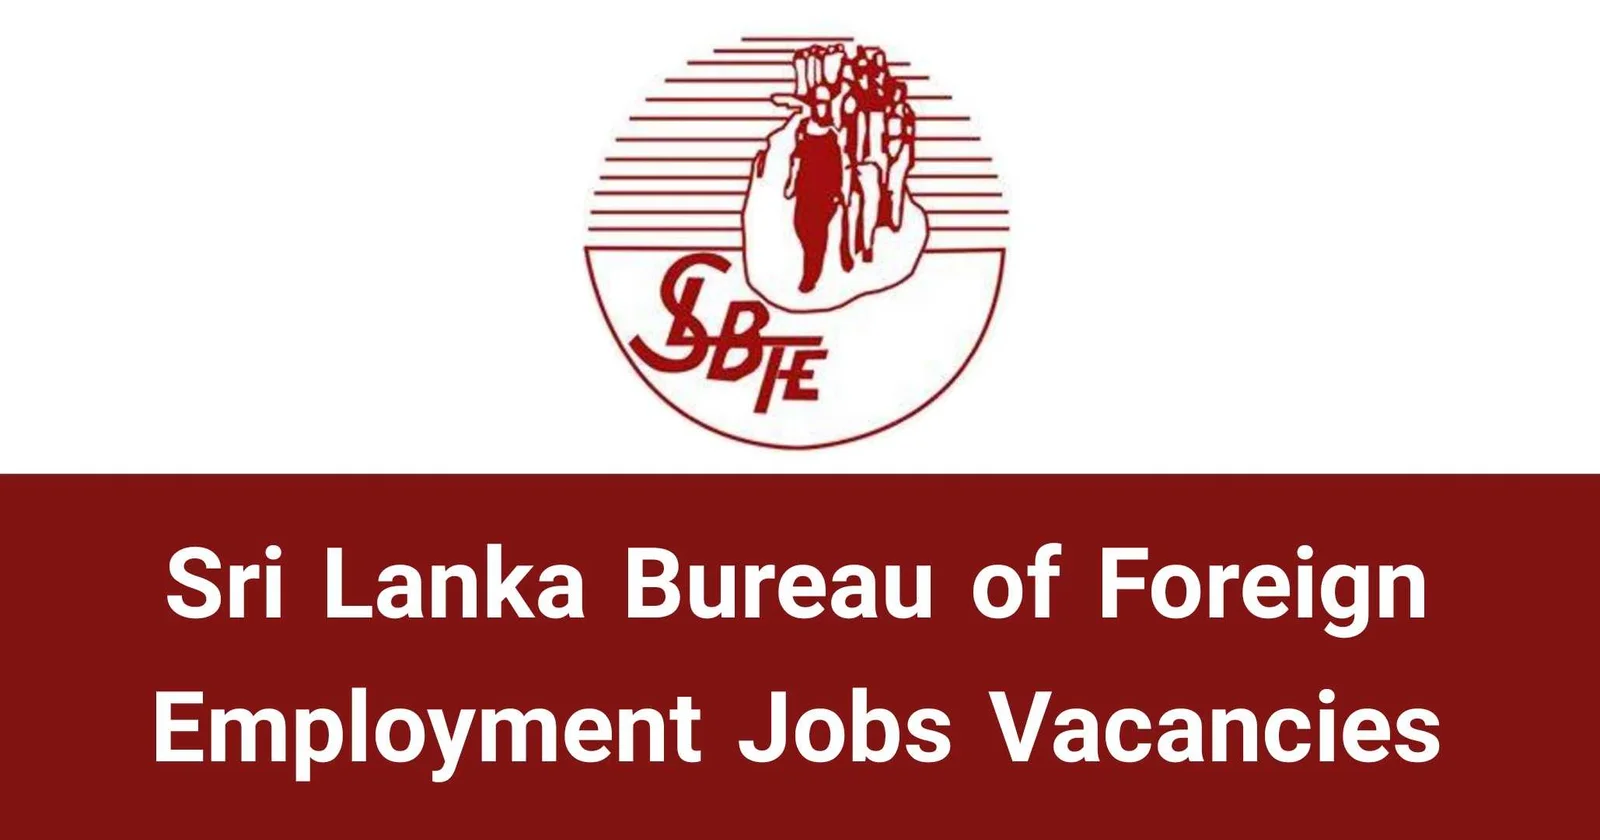 Sri Lanka Bureau of Foreign Employment Jobs Vacancies Recruitments